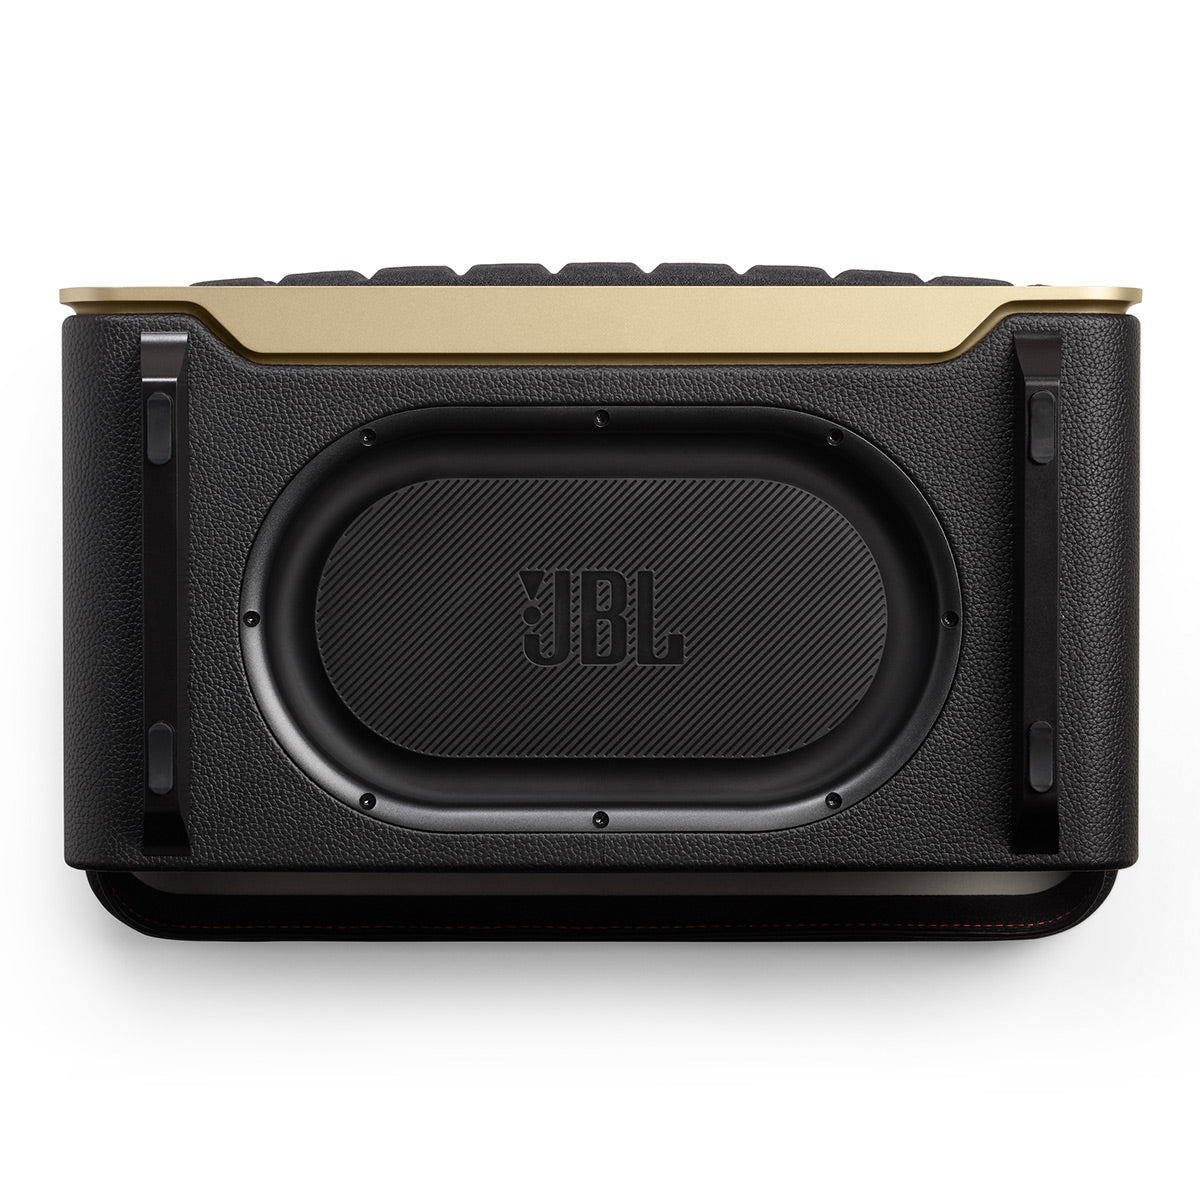 JBL Authentics 300 Portable Wireless Bluetooth Speaker (Black/Gold)